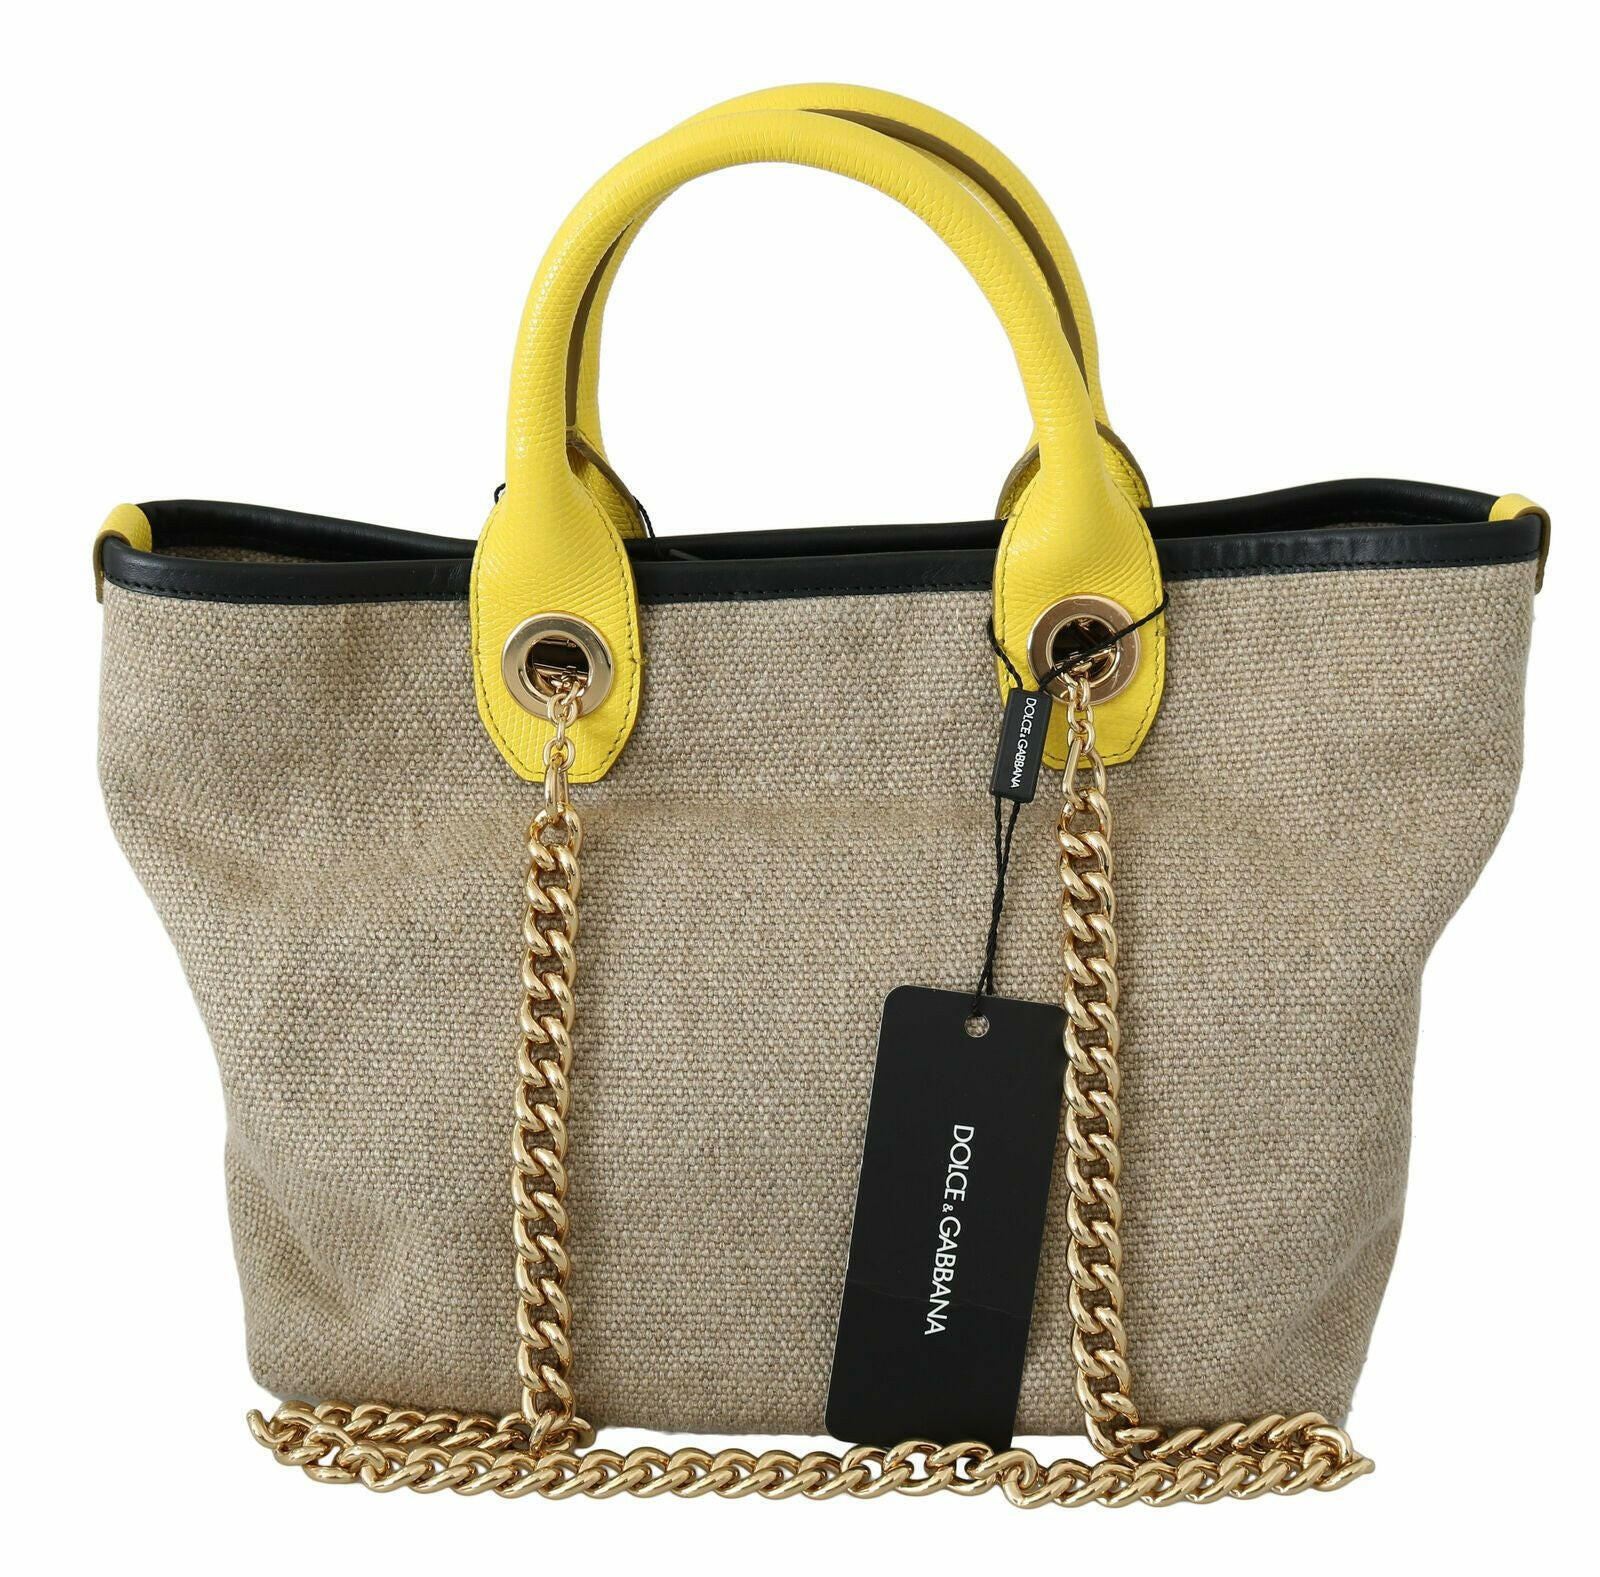 Dolce & Gabbana Beige Gold Chain Strap Shoulder Sling Purse Tote Bag - GENUINE AUTHENTIC BRAND LLC  